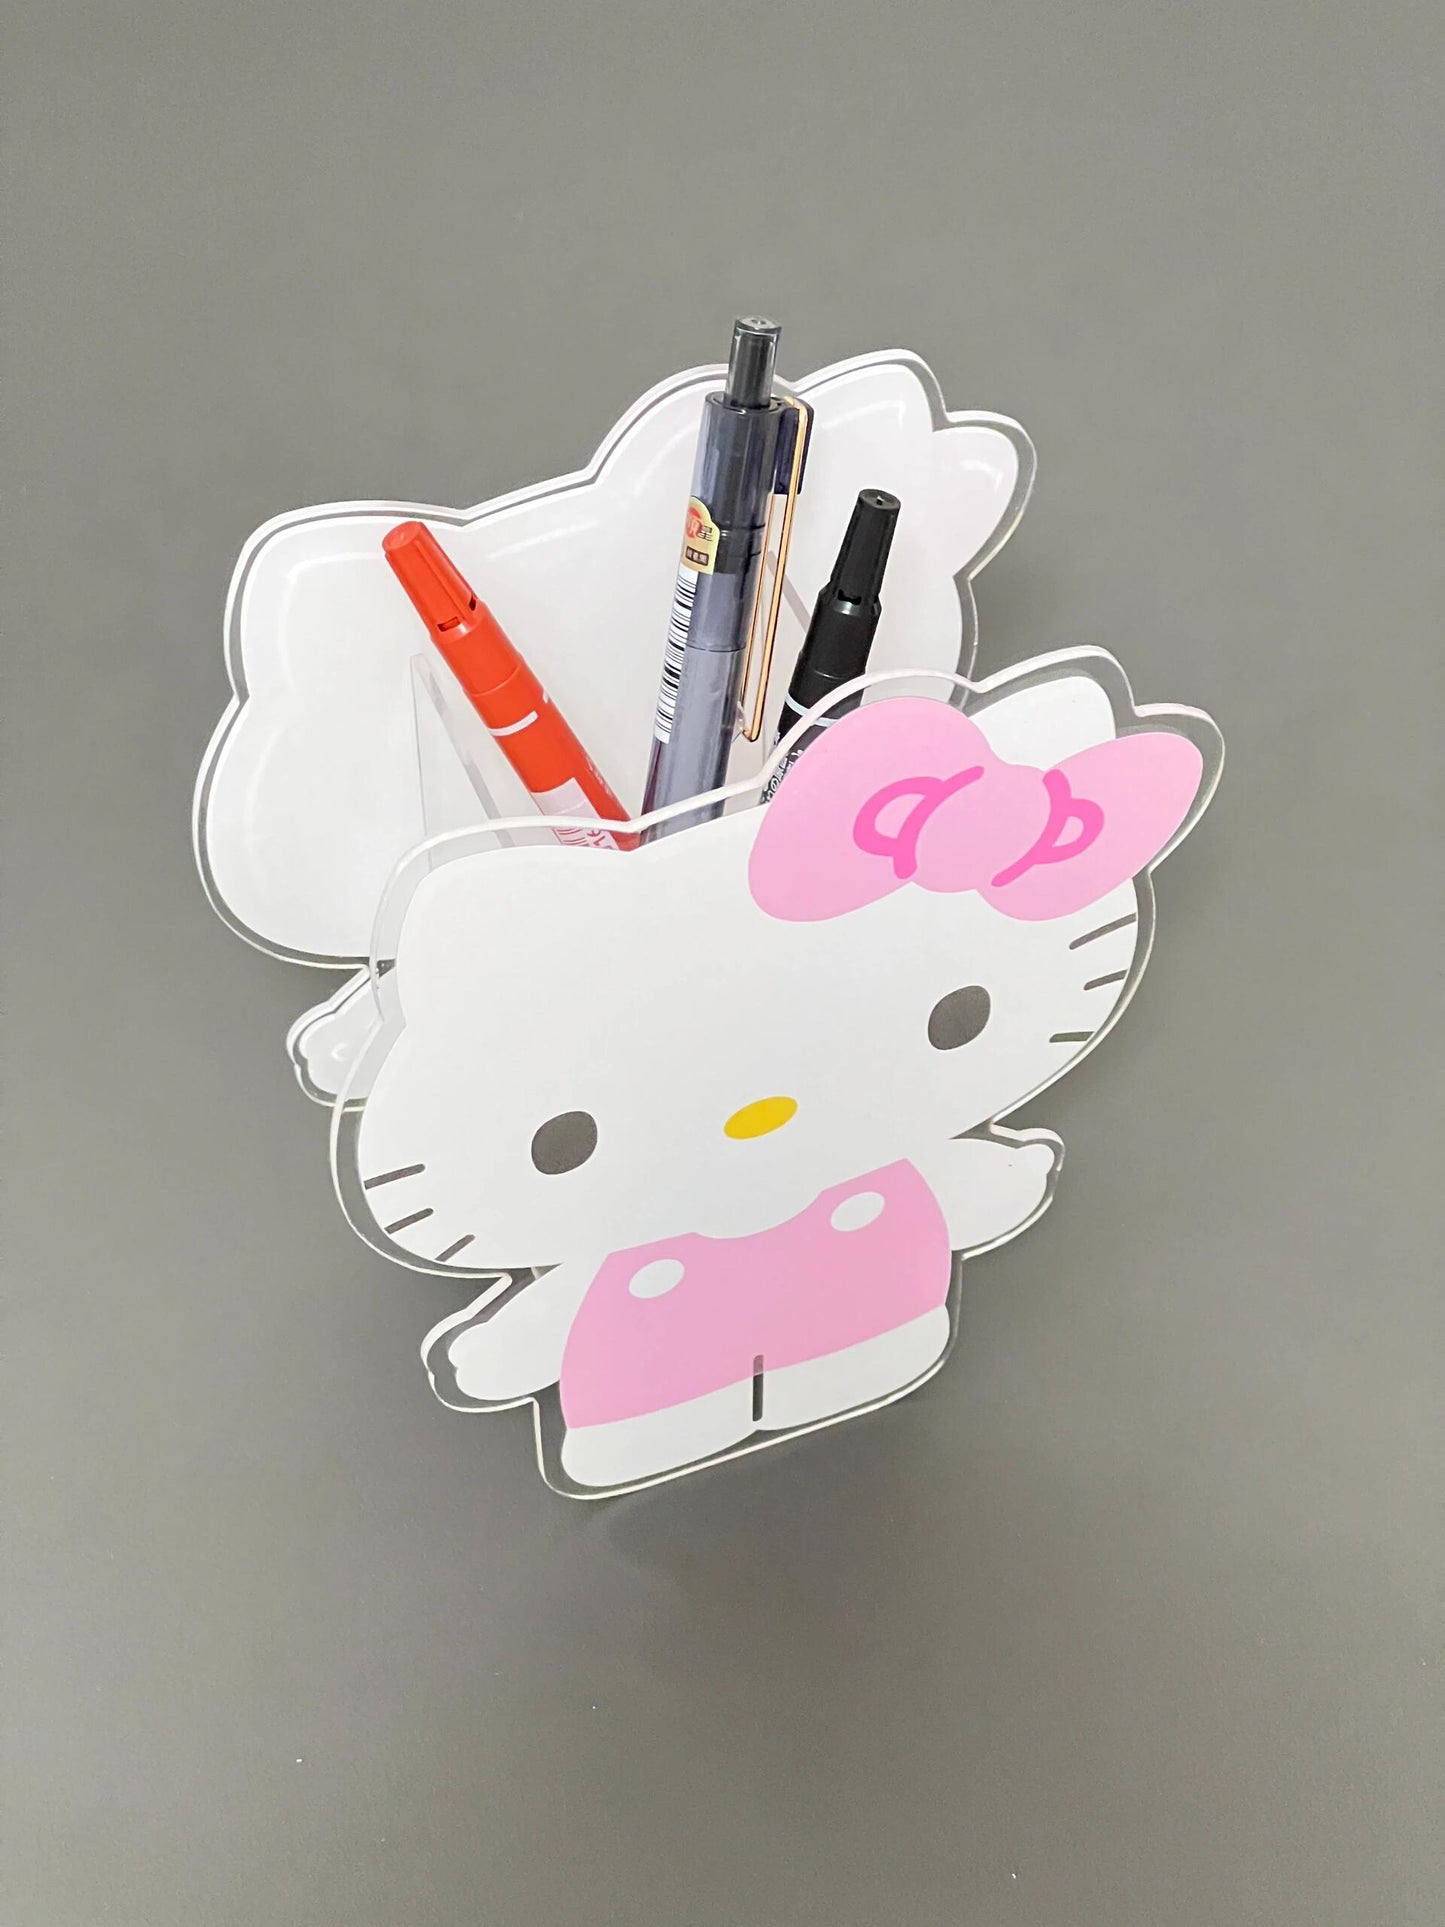 Sanrio Acrylic Pencil Pen Holder Cup Desk Accessories Holder Makeup Brush Storage Organizer